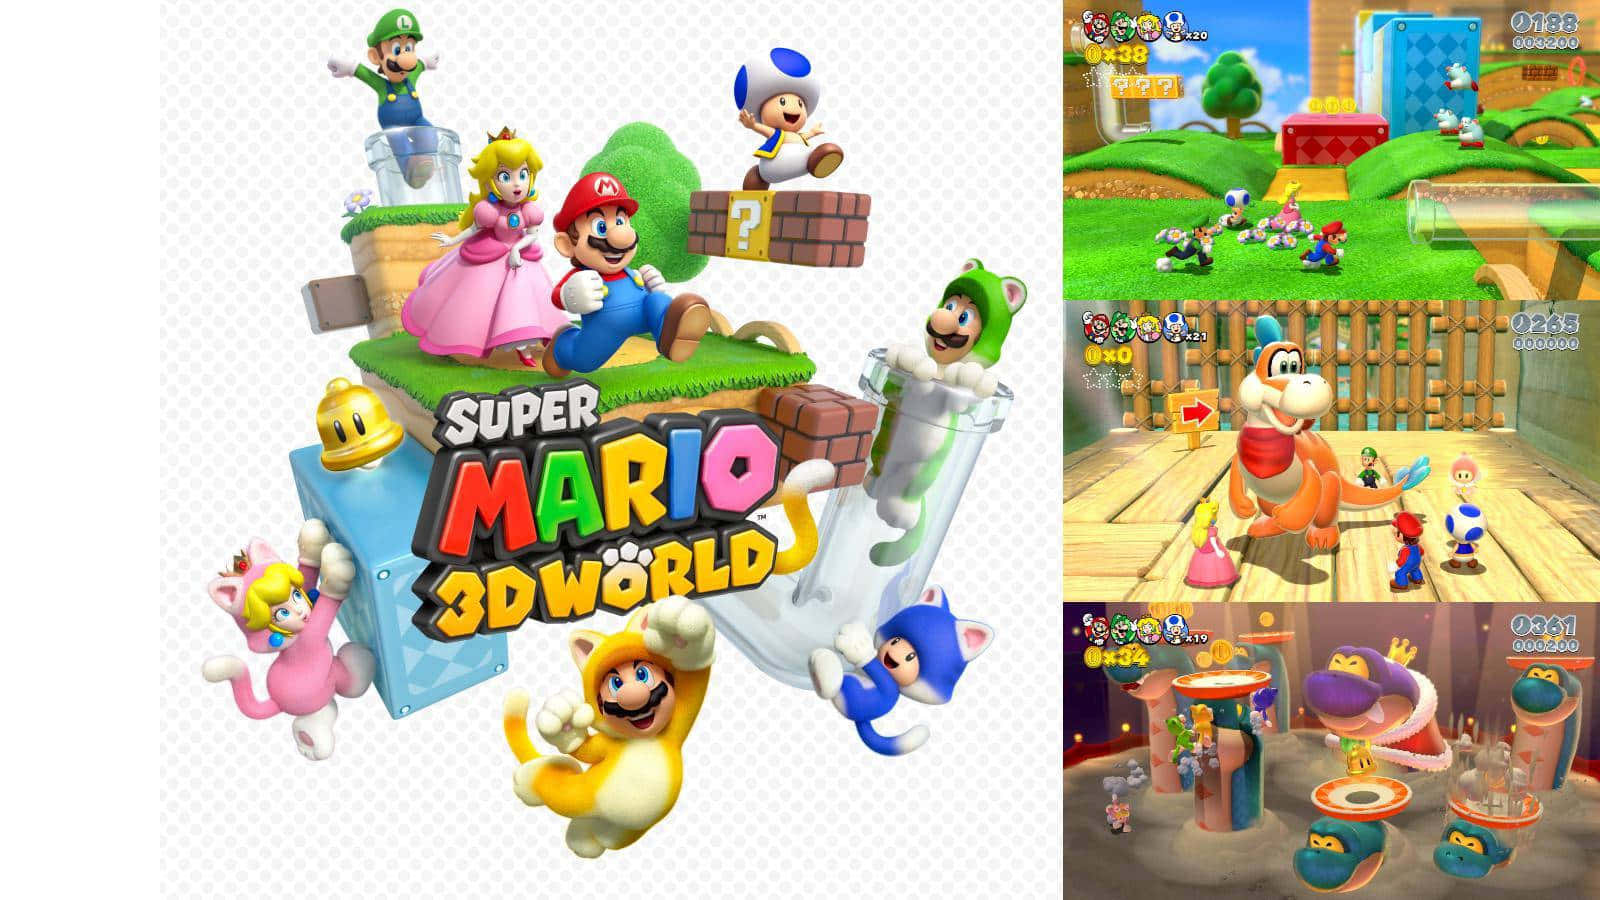 Super Mario 3d World - Nintendo Nintendo Nintendo Nintendo Nintend Wallpaper